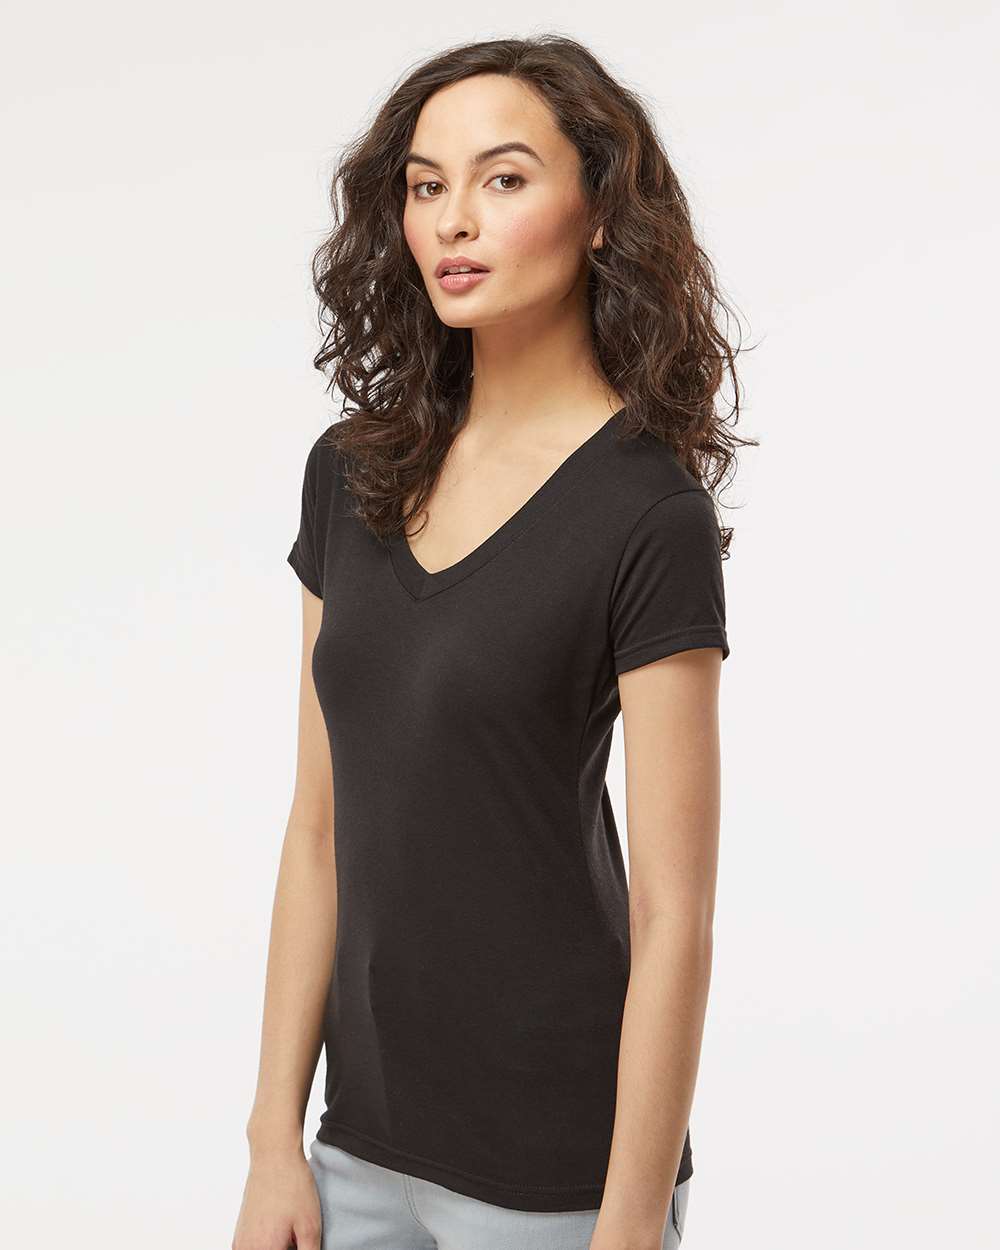 Deluxe Blend V-Neck - Ladies T-Shirt - M&O 3542